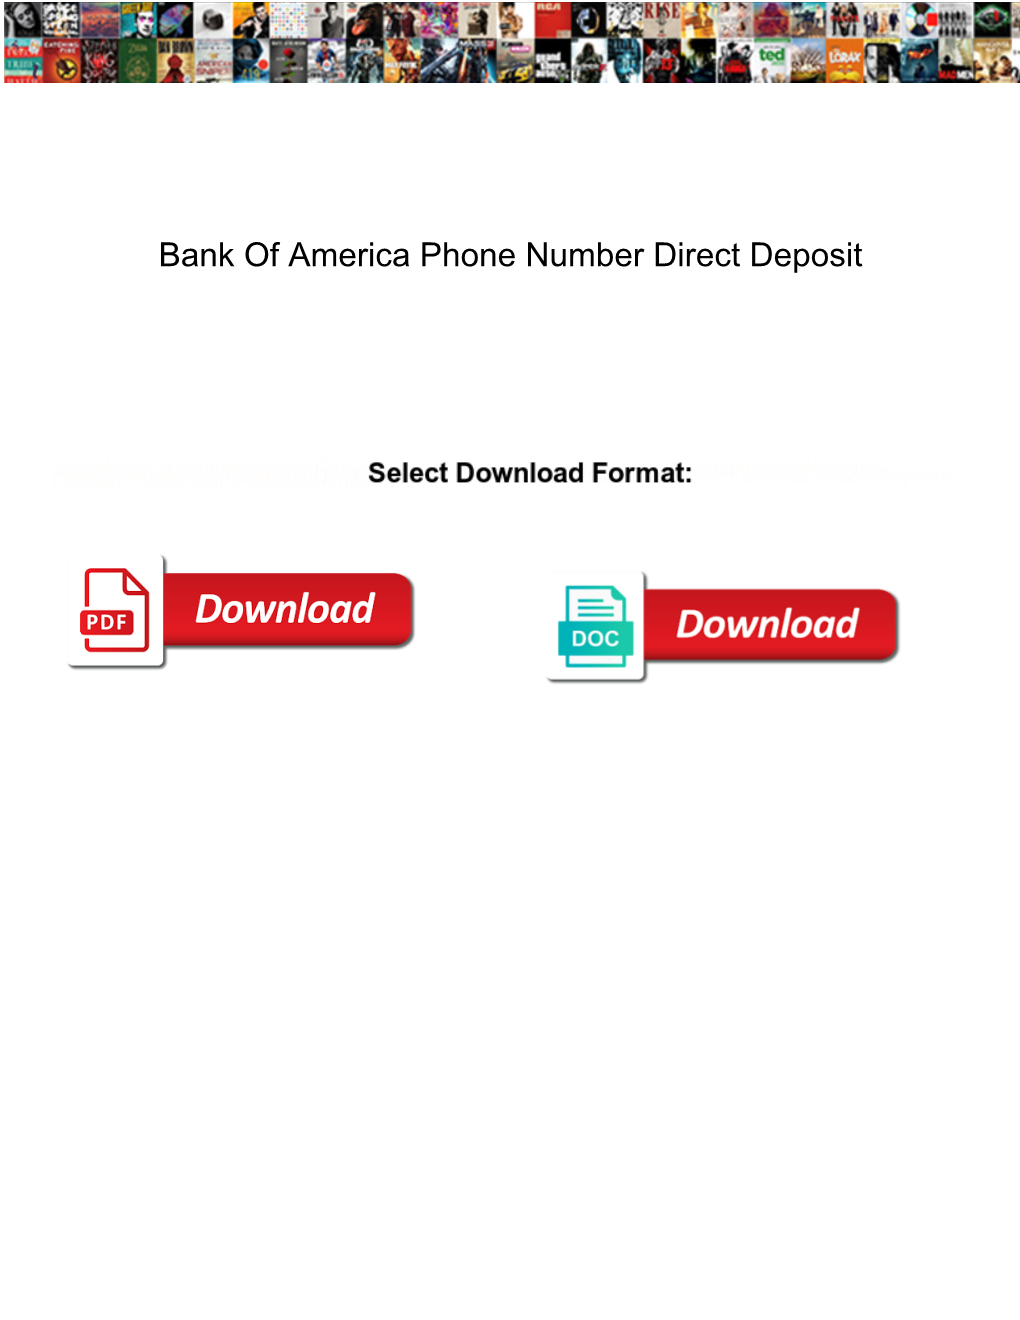 Bank of America Phone Number Direct Deposit